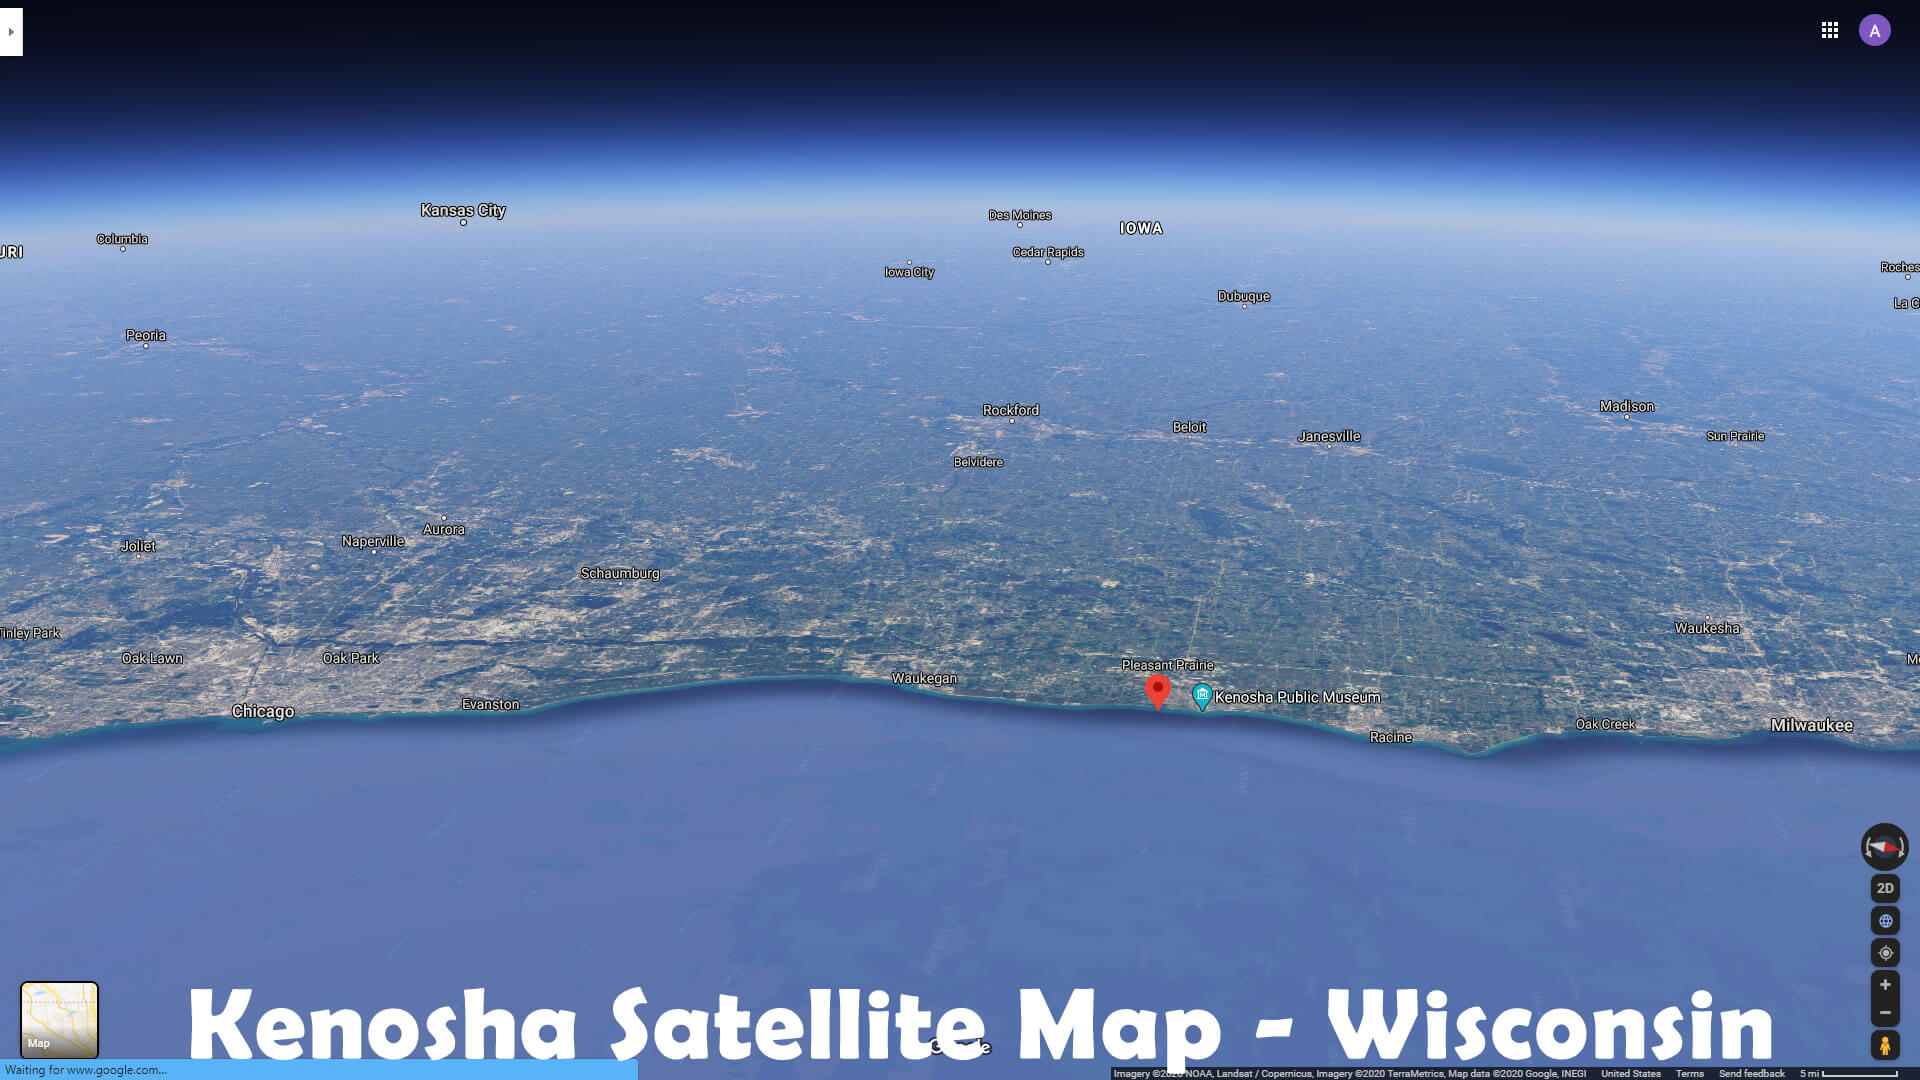 Kenosha Satellite Map - Wisconsin